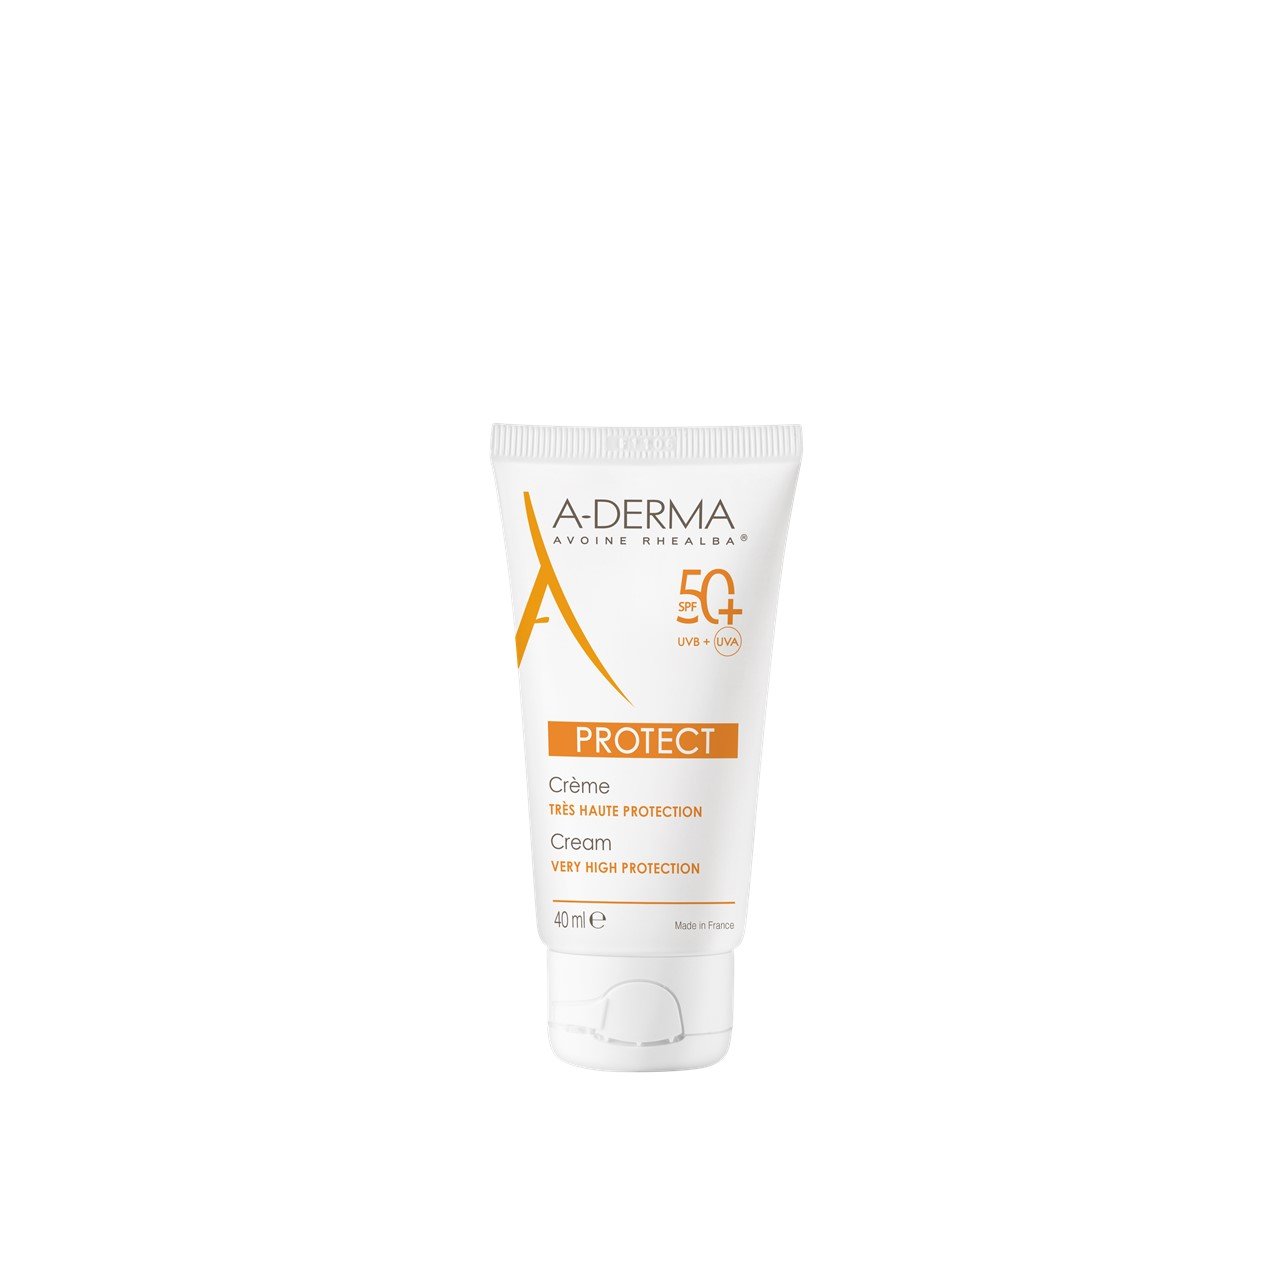 A-Derma Protect Cream SPF50+ 40ml (1.35fl oz)